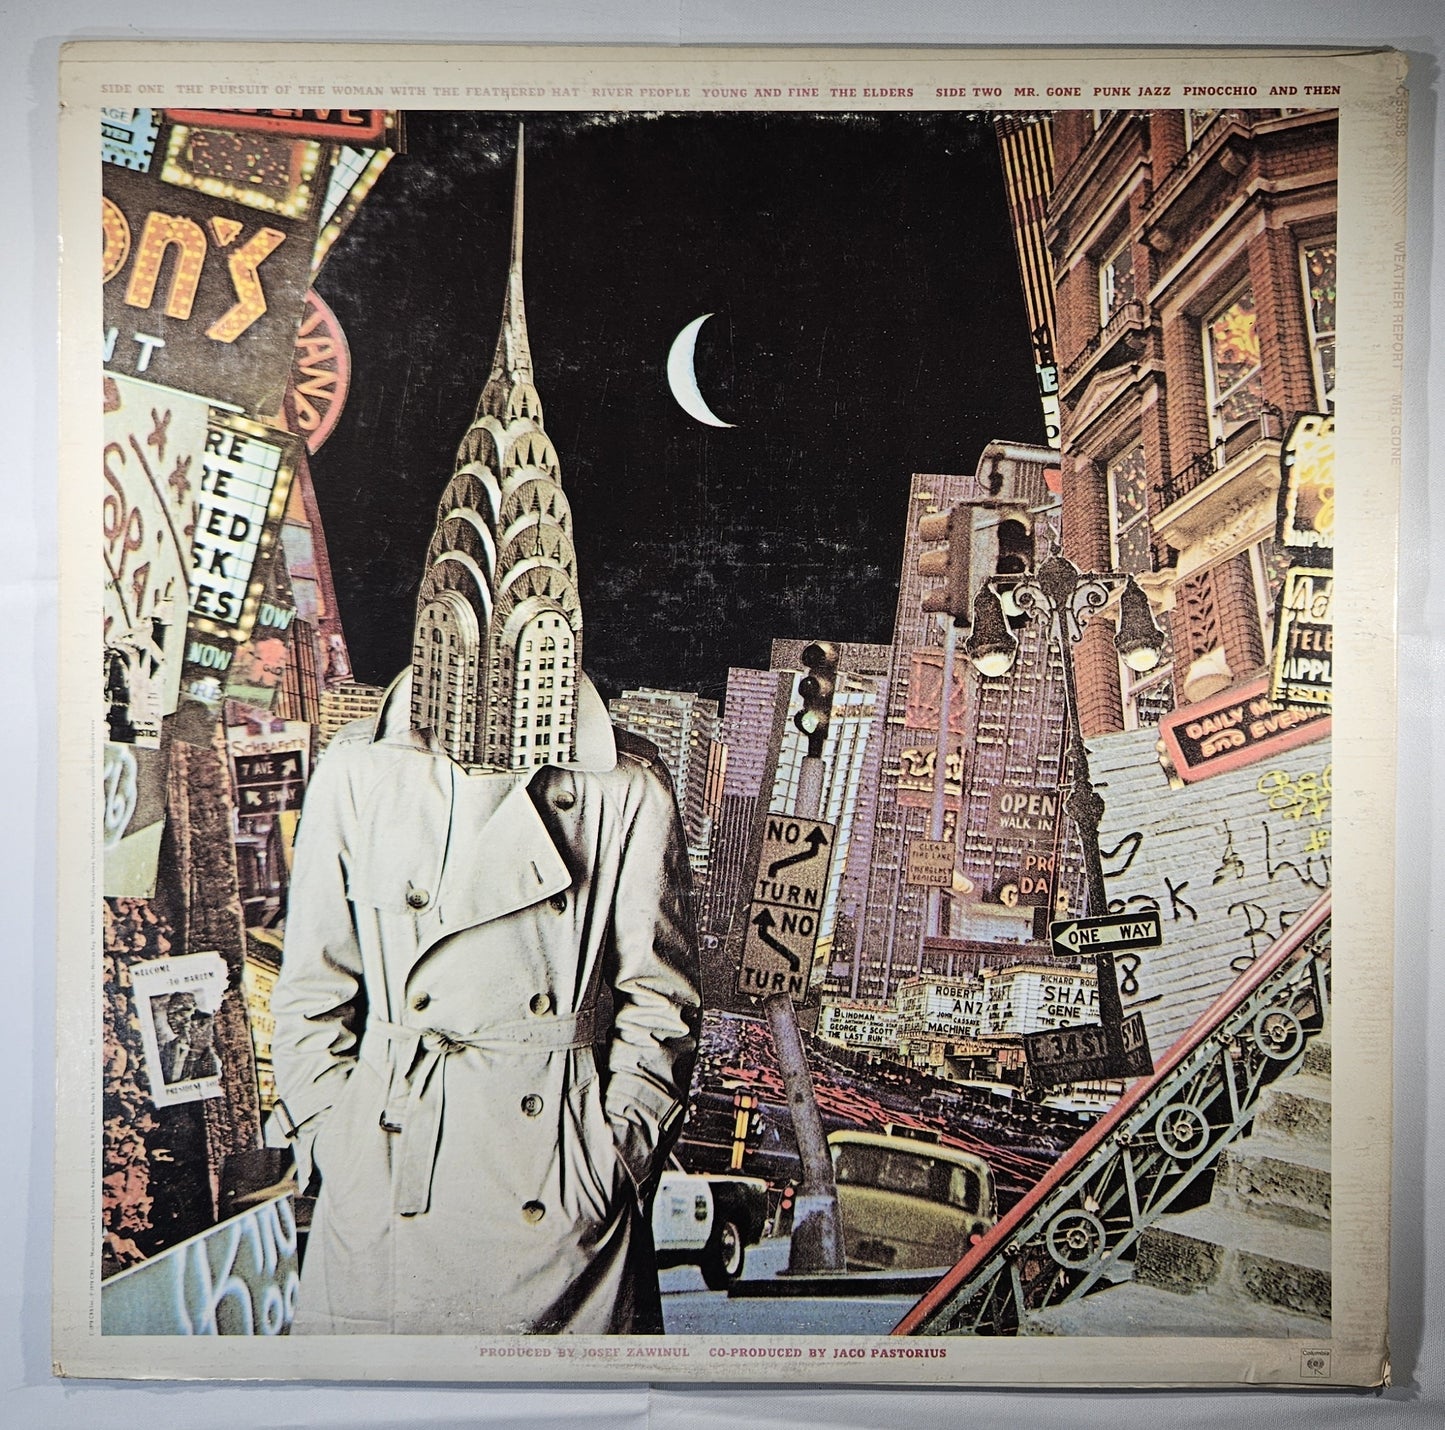 Weather Report - Mr. Gone [1978 Terre Haute Pressing] [Used Vinyl Record LP]